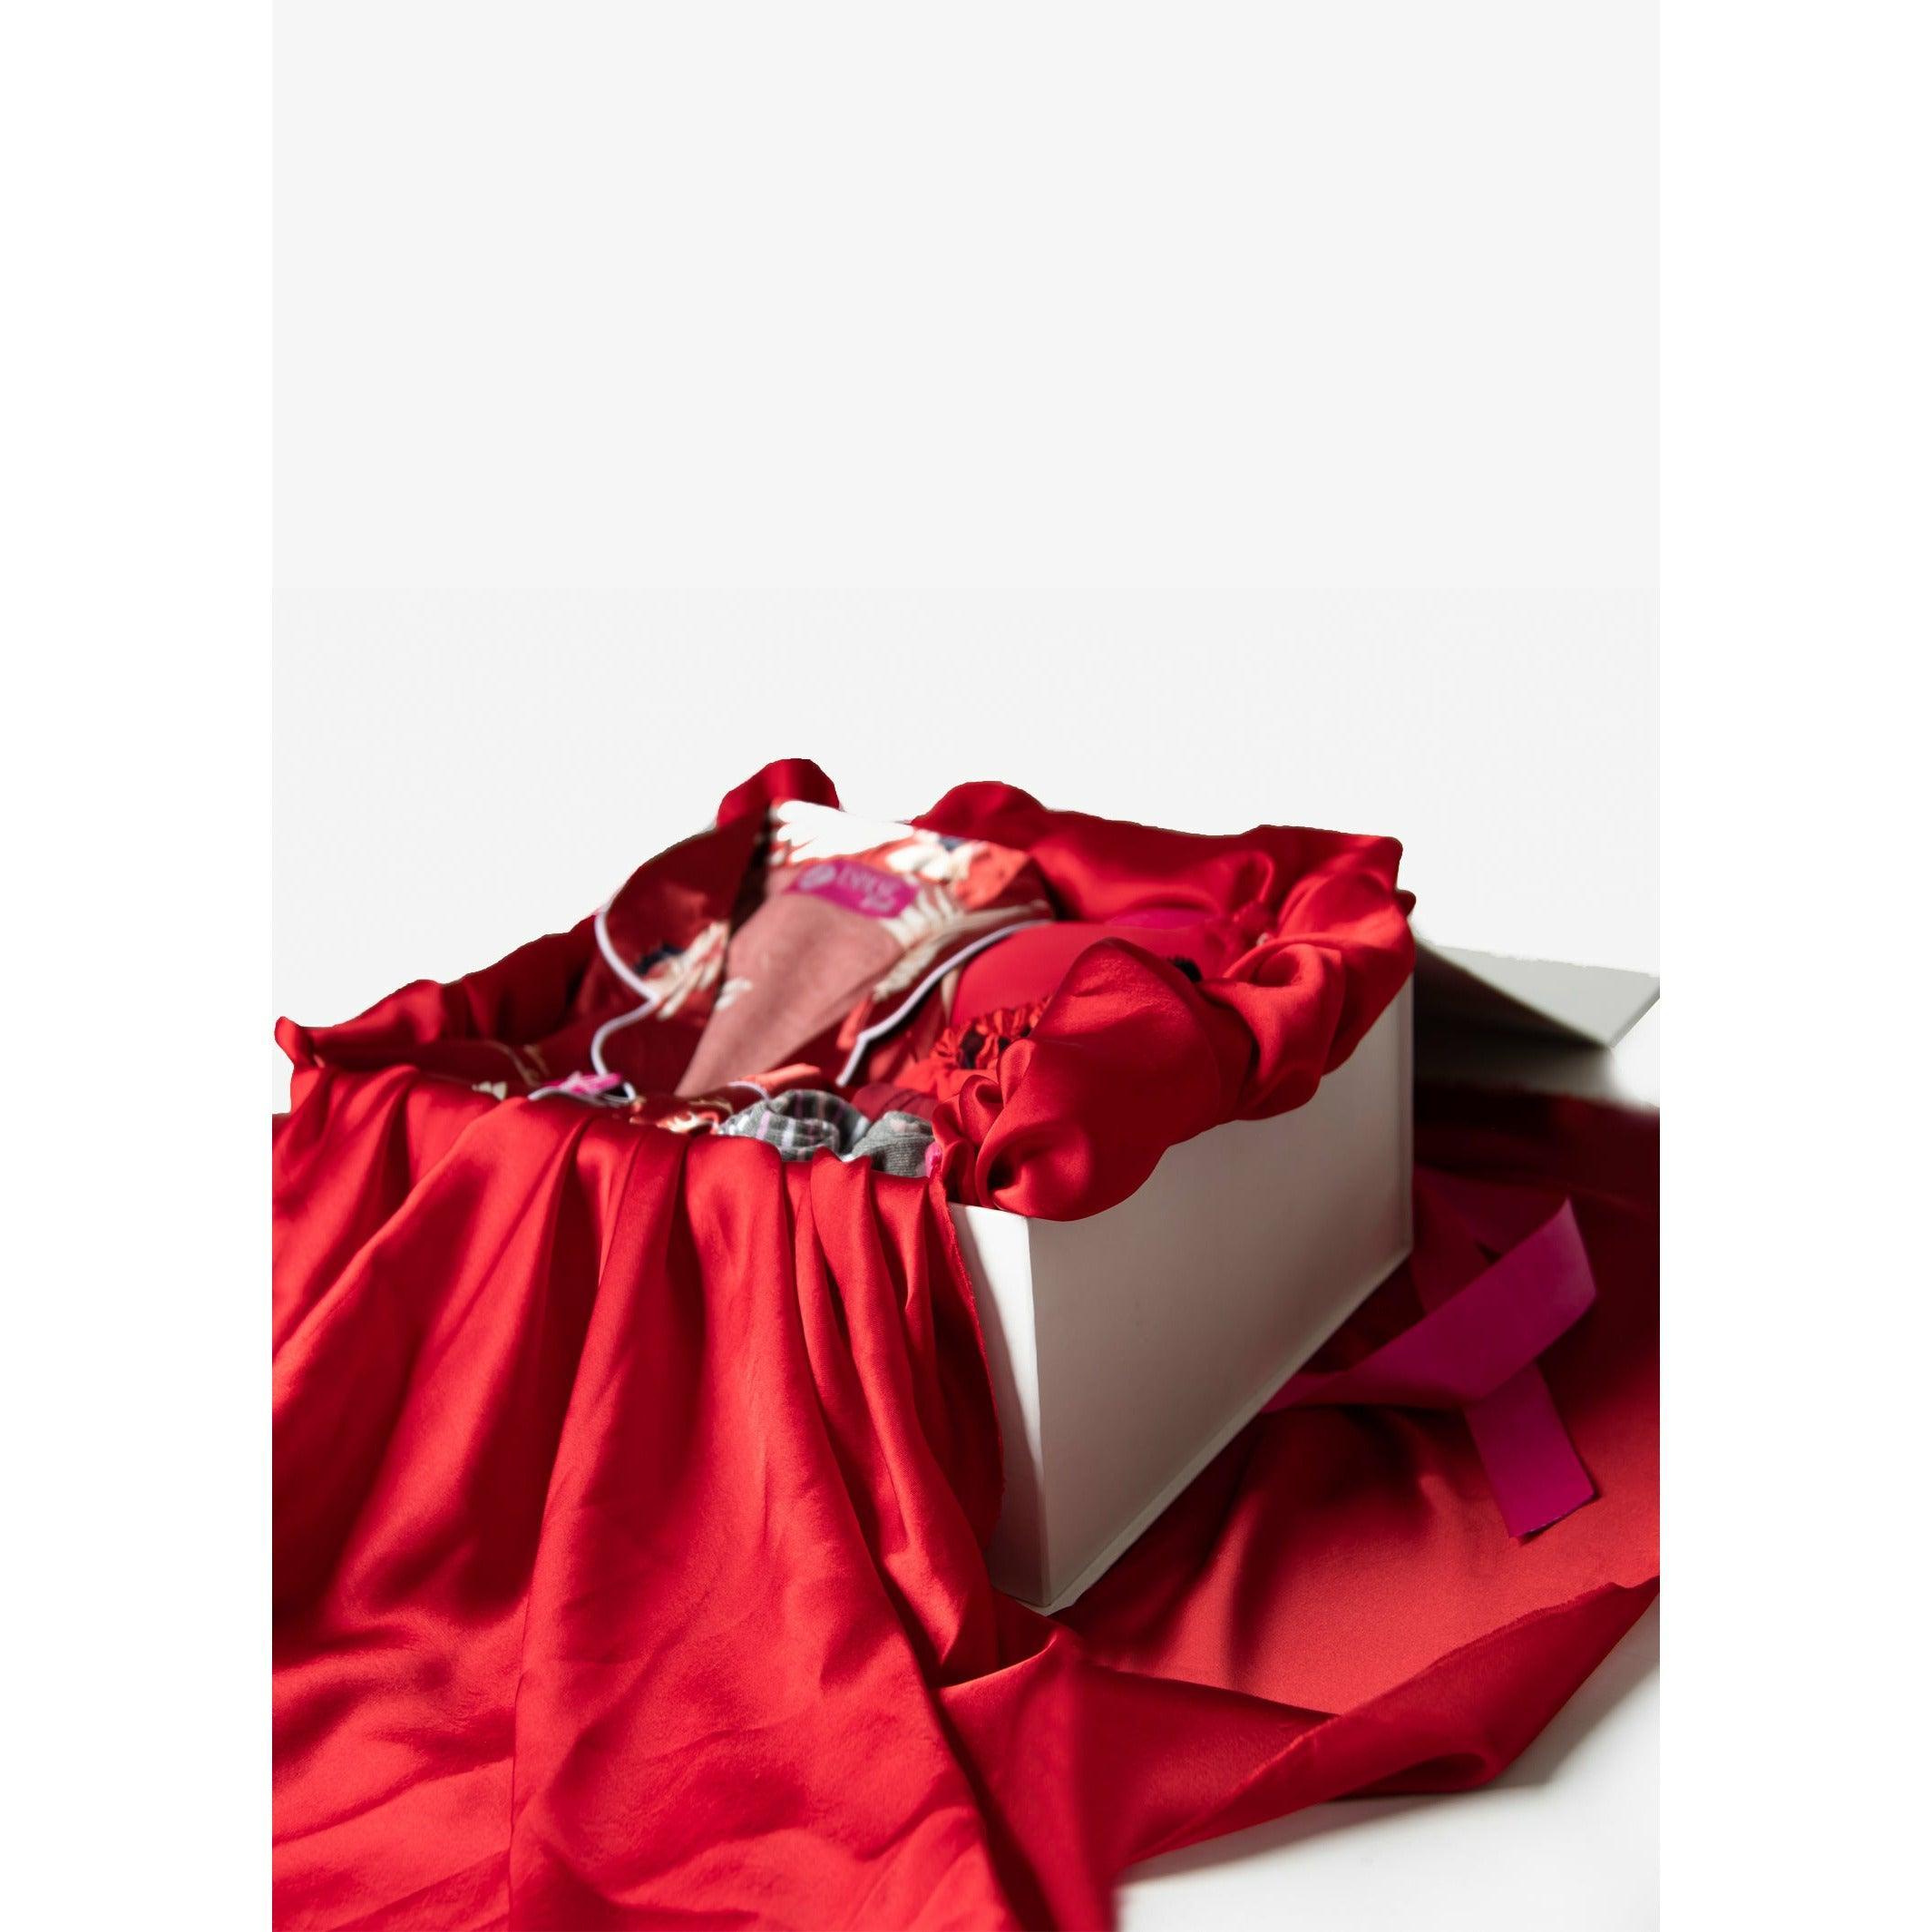 Espico Pink Luxury 10 pcs. Wedding Gift Box - Espicopink